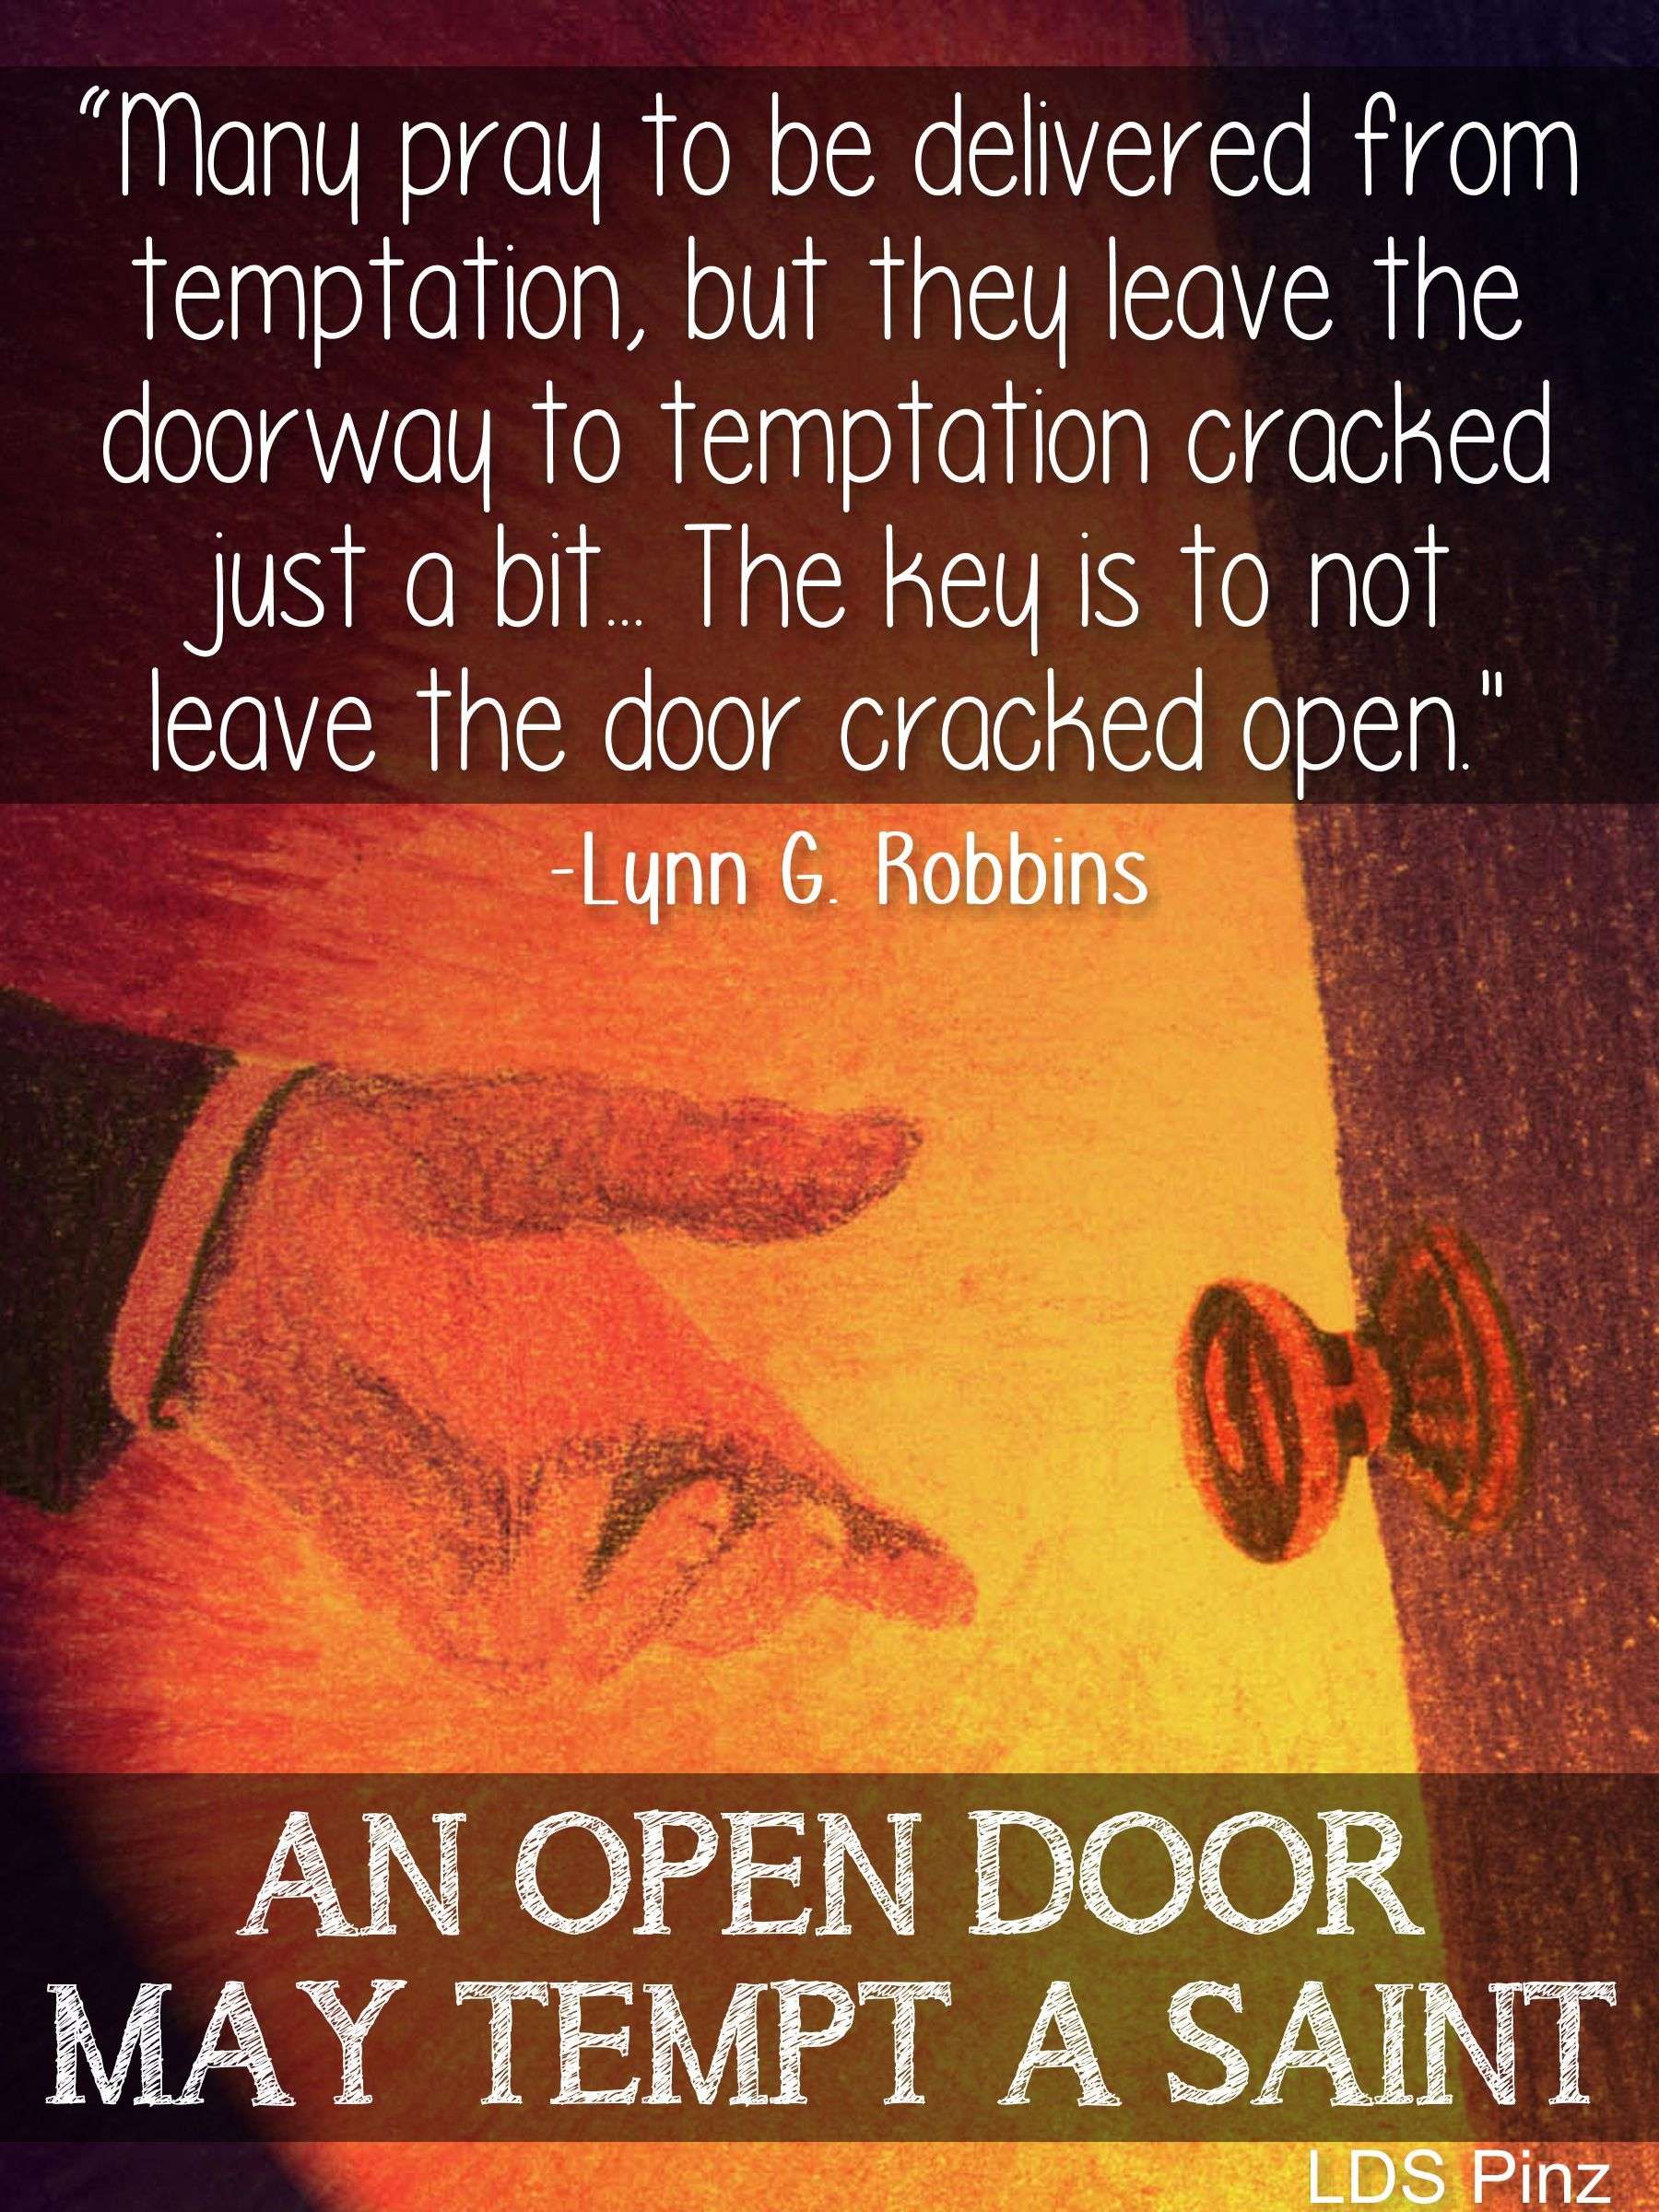 Avoiding Temptation Easier Than Resisting, Elder Robbins says. www.lds ...